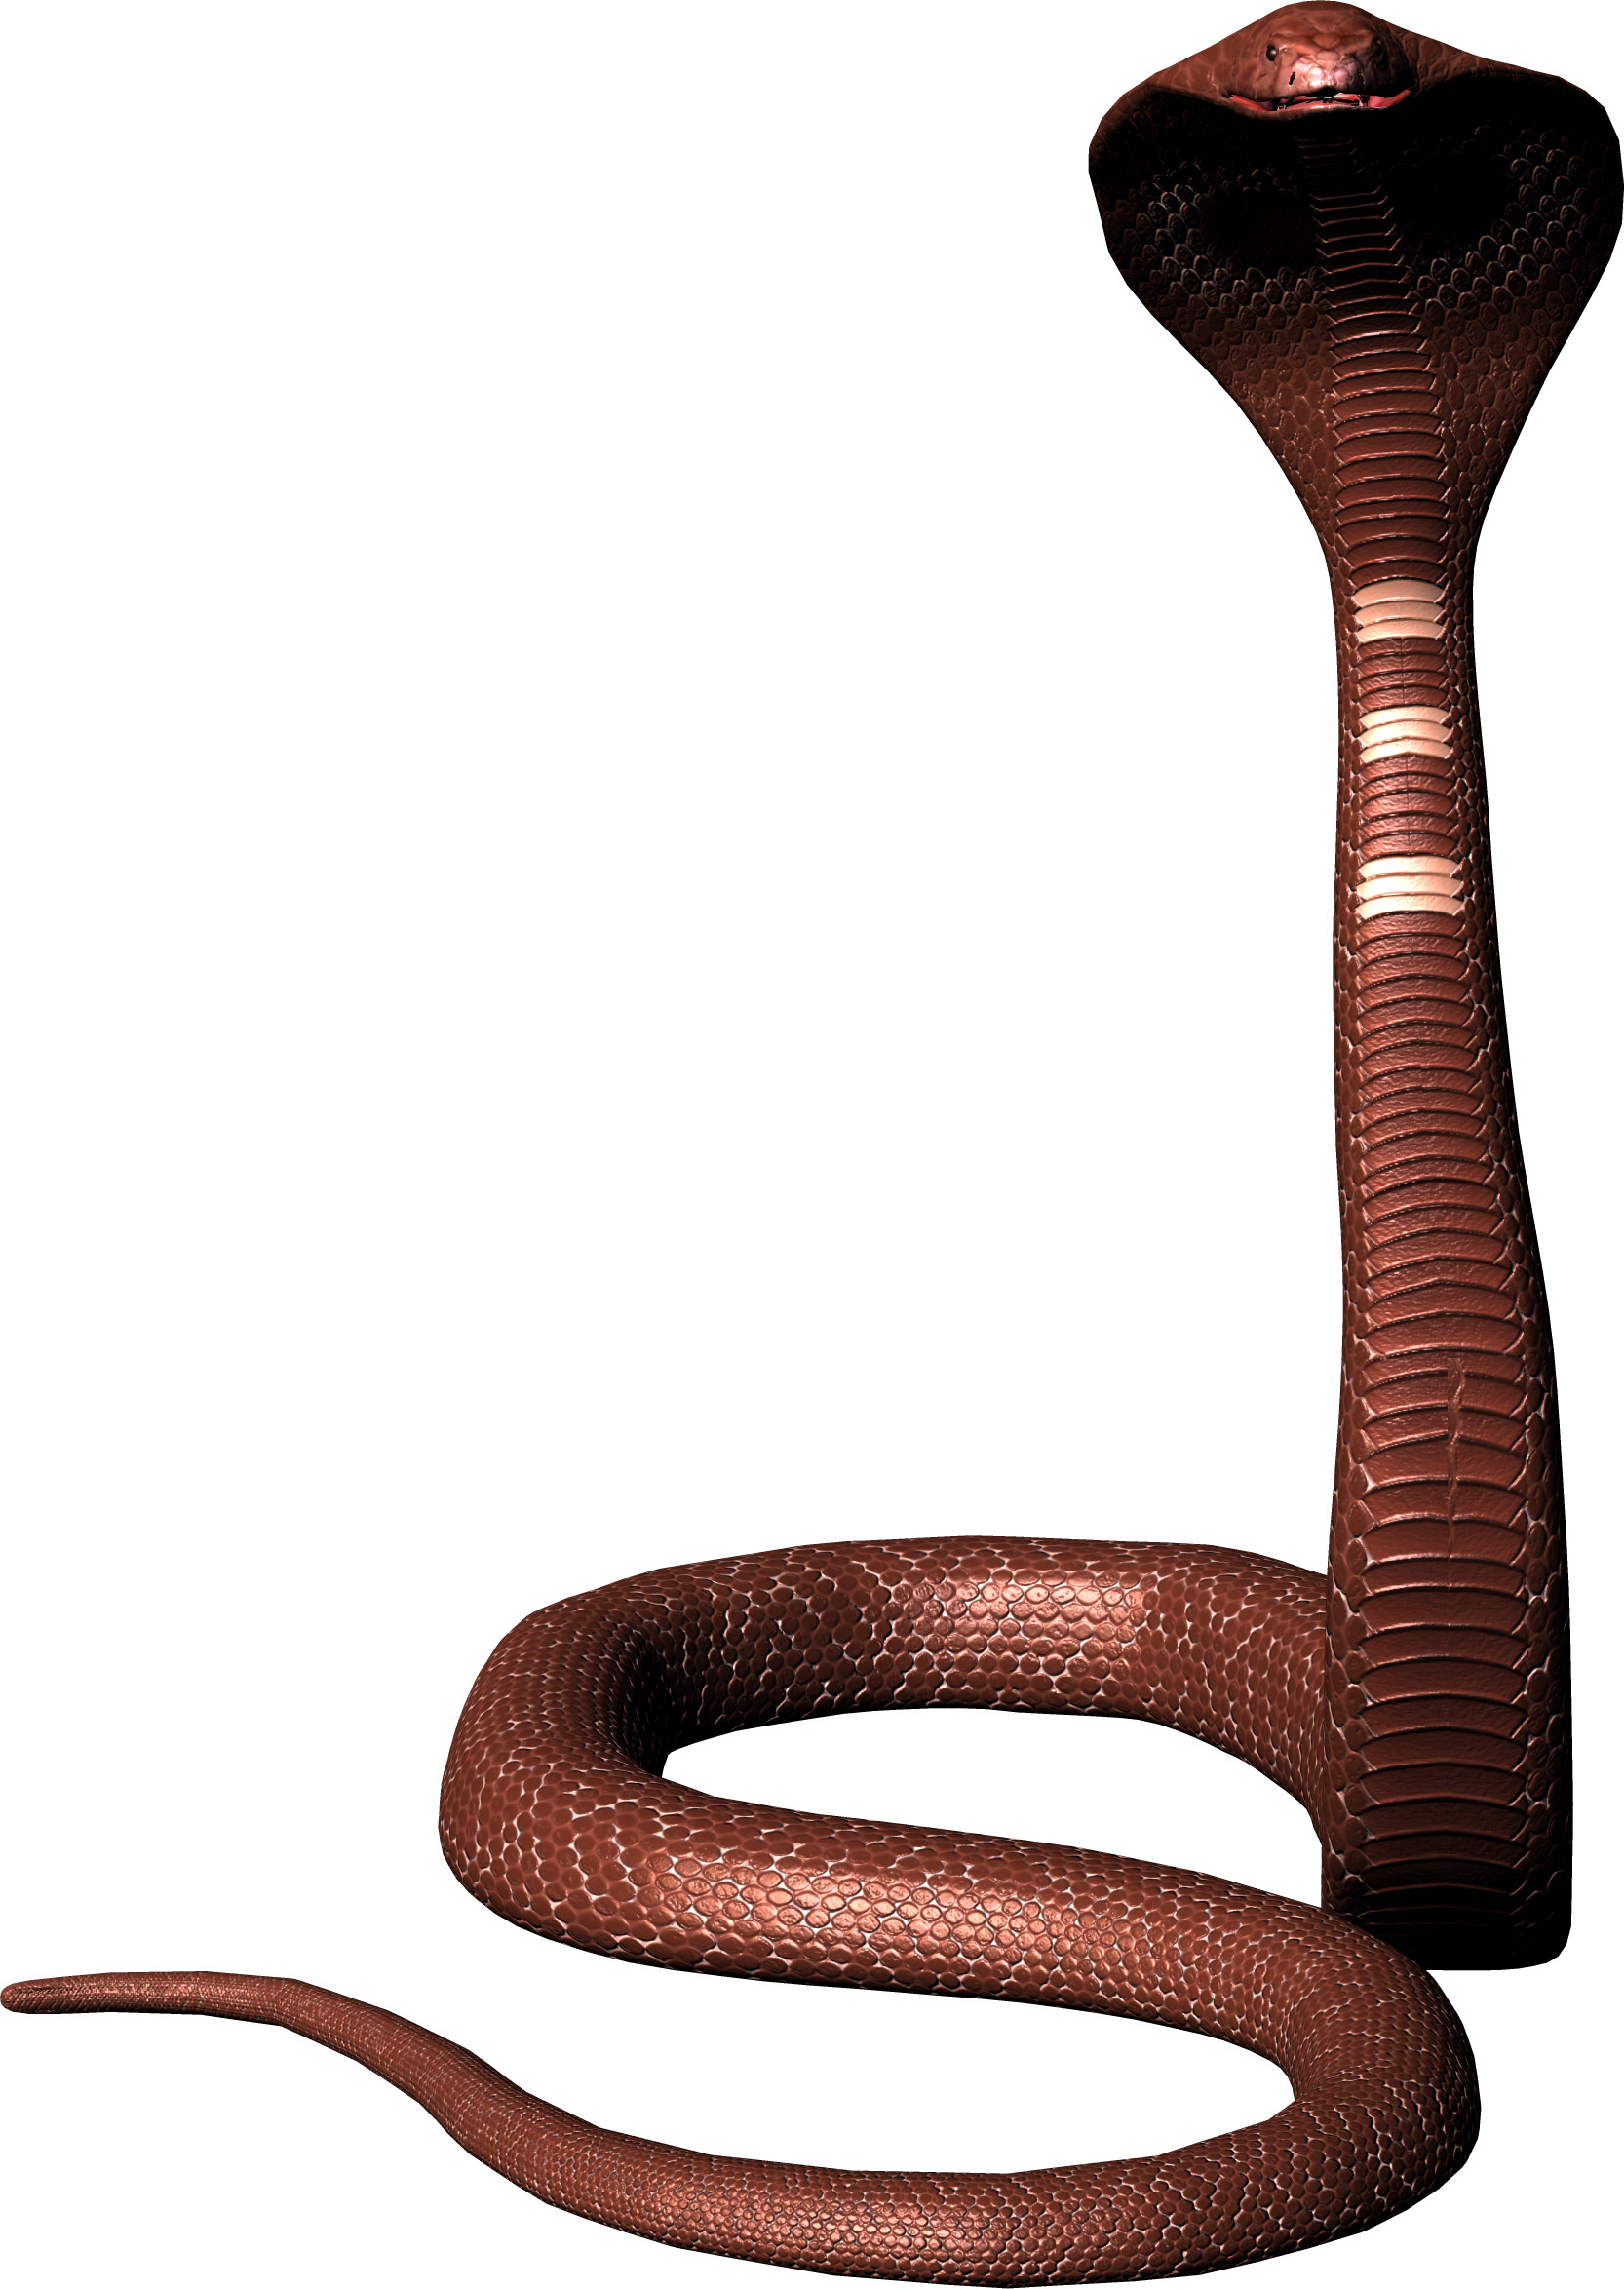 1666x2348 Cobra snake PNG image, free download picture | Ãllatok2 | Pinterest | Cobra  snake, Snakes and Snake